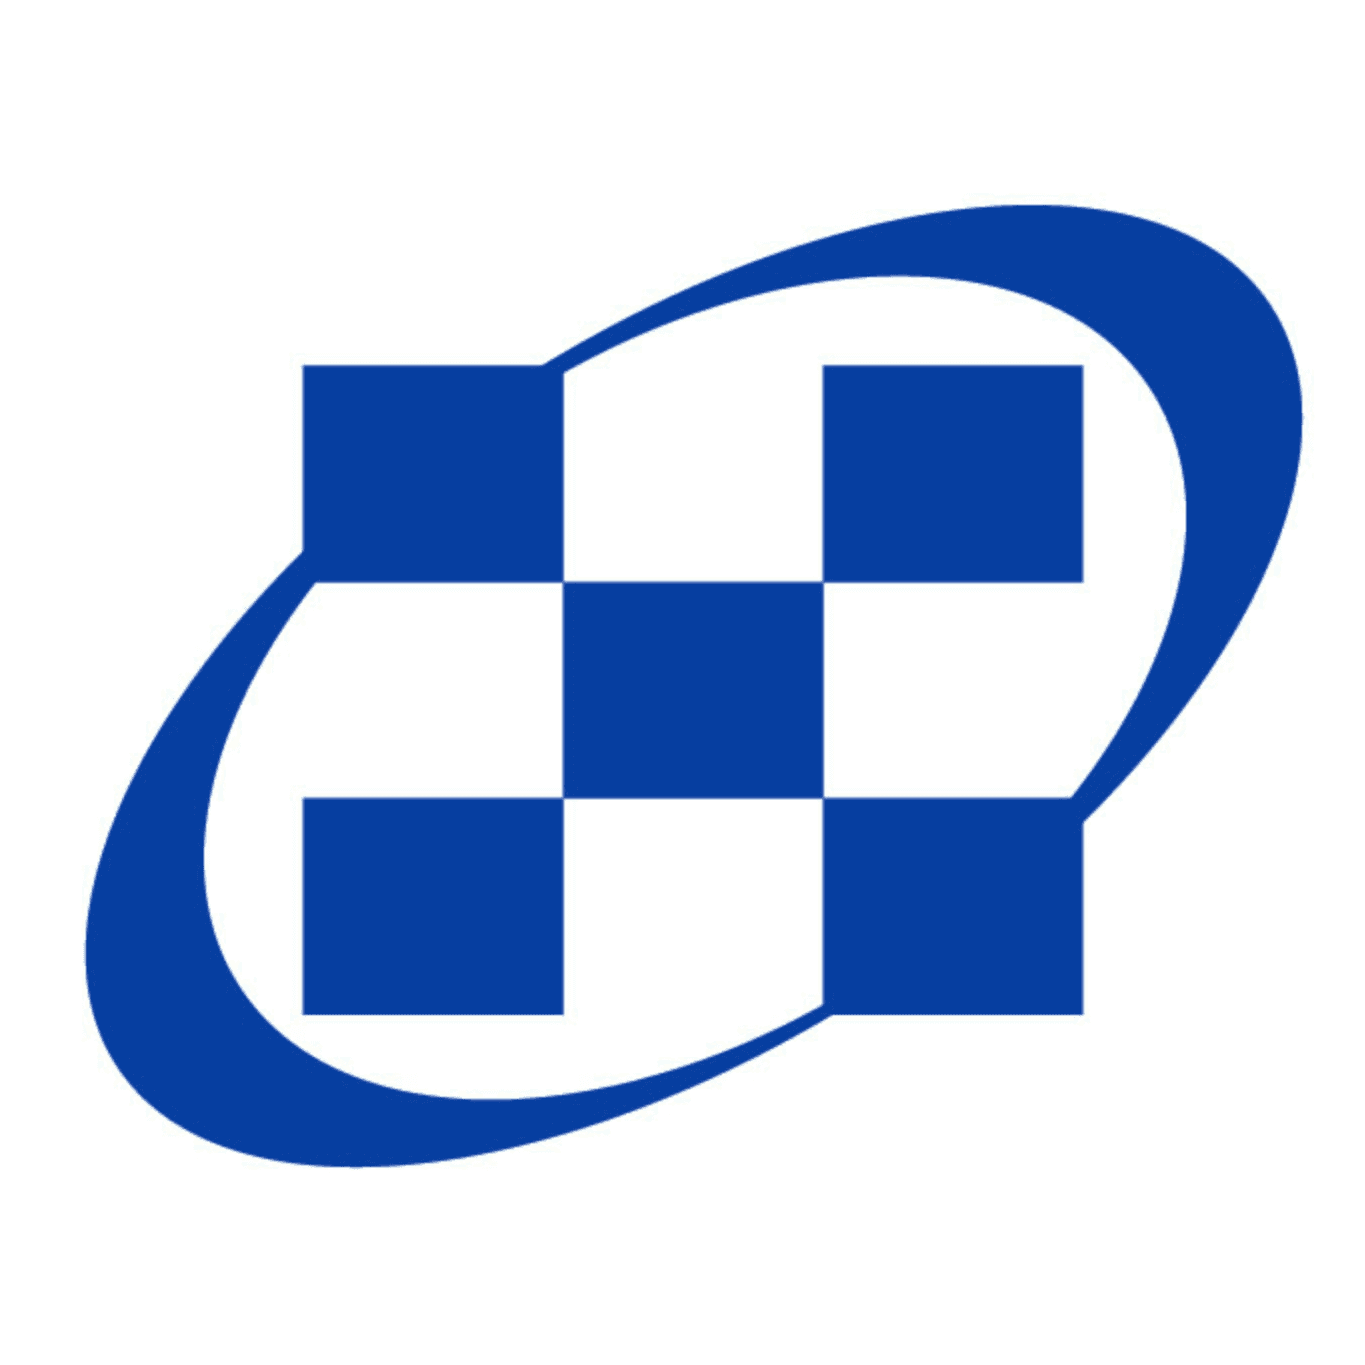 地方独立行政法人大阪府立病院機構 大阪急性期・総合医療センターのロゴ画像